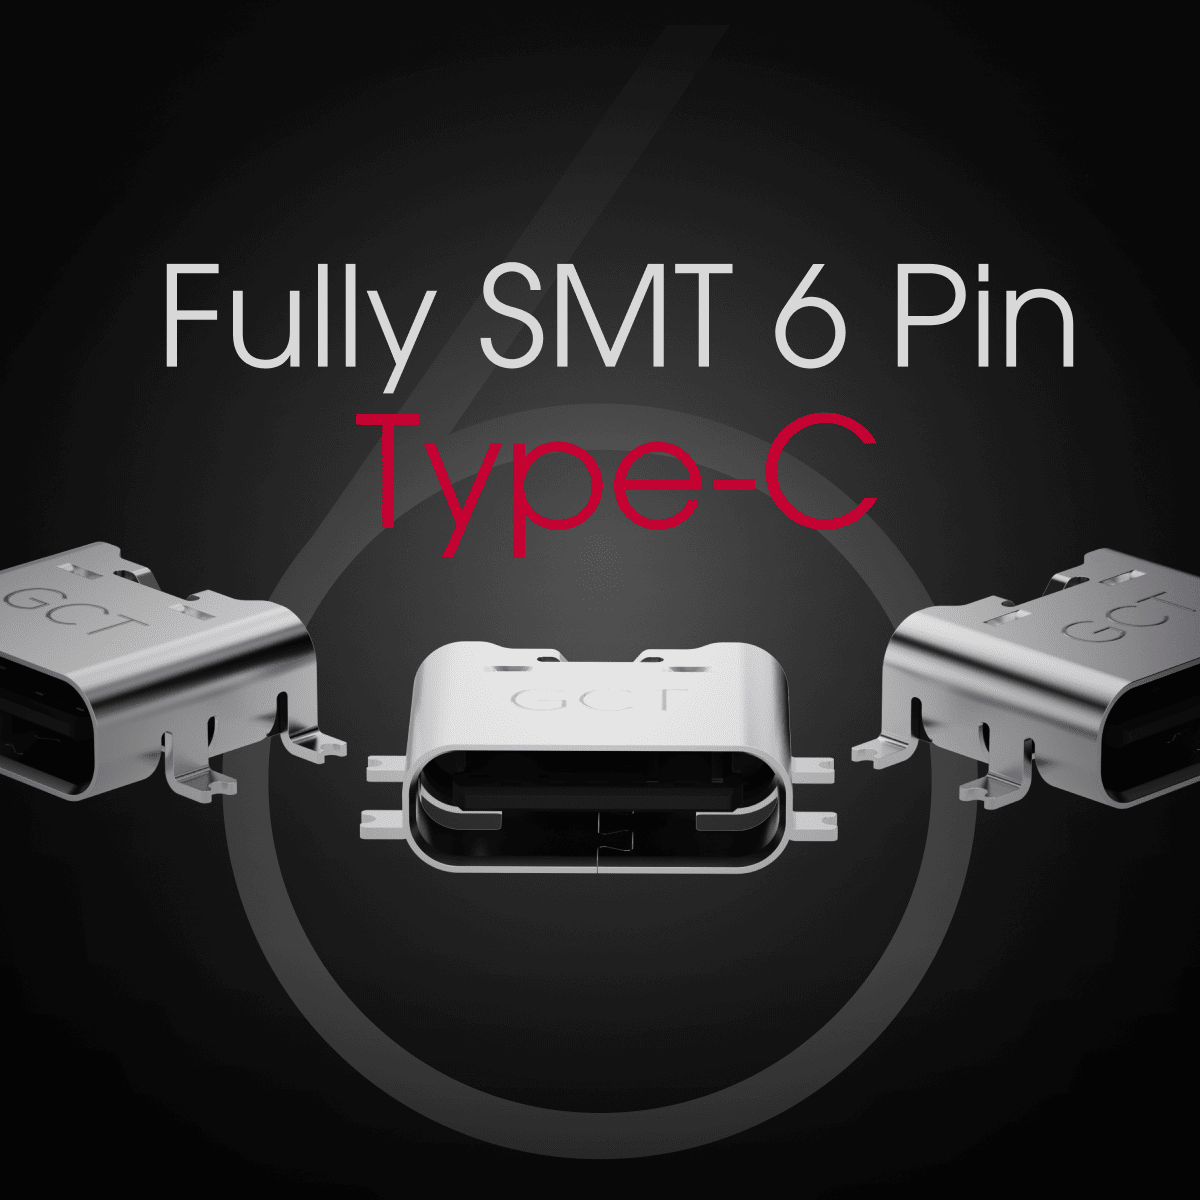 Fully SMT 6 Pin USB Type-C